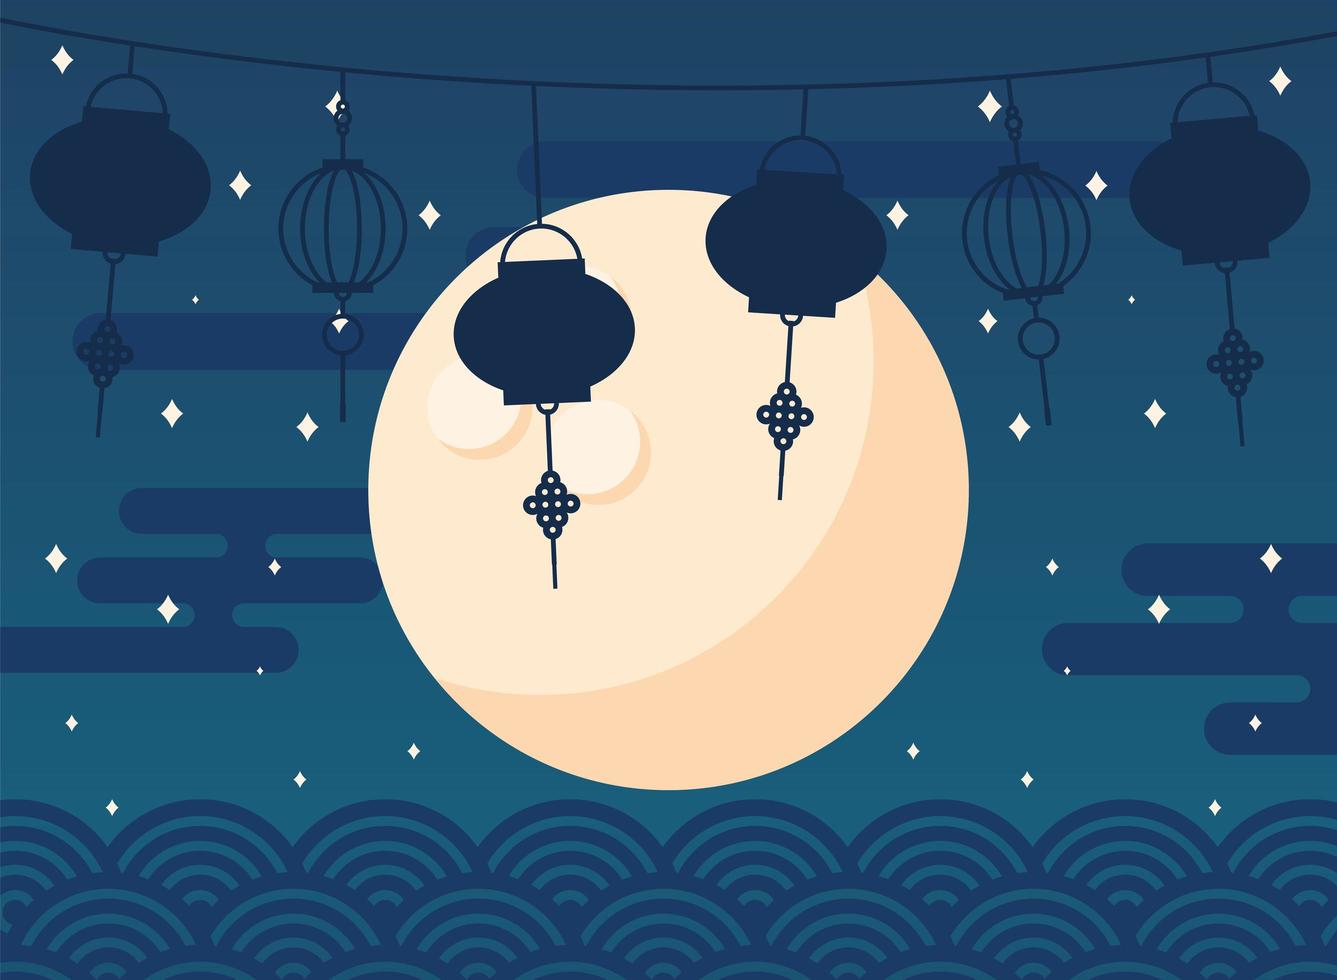 Happy mid autumn festival with lanterns vector design